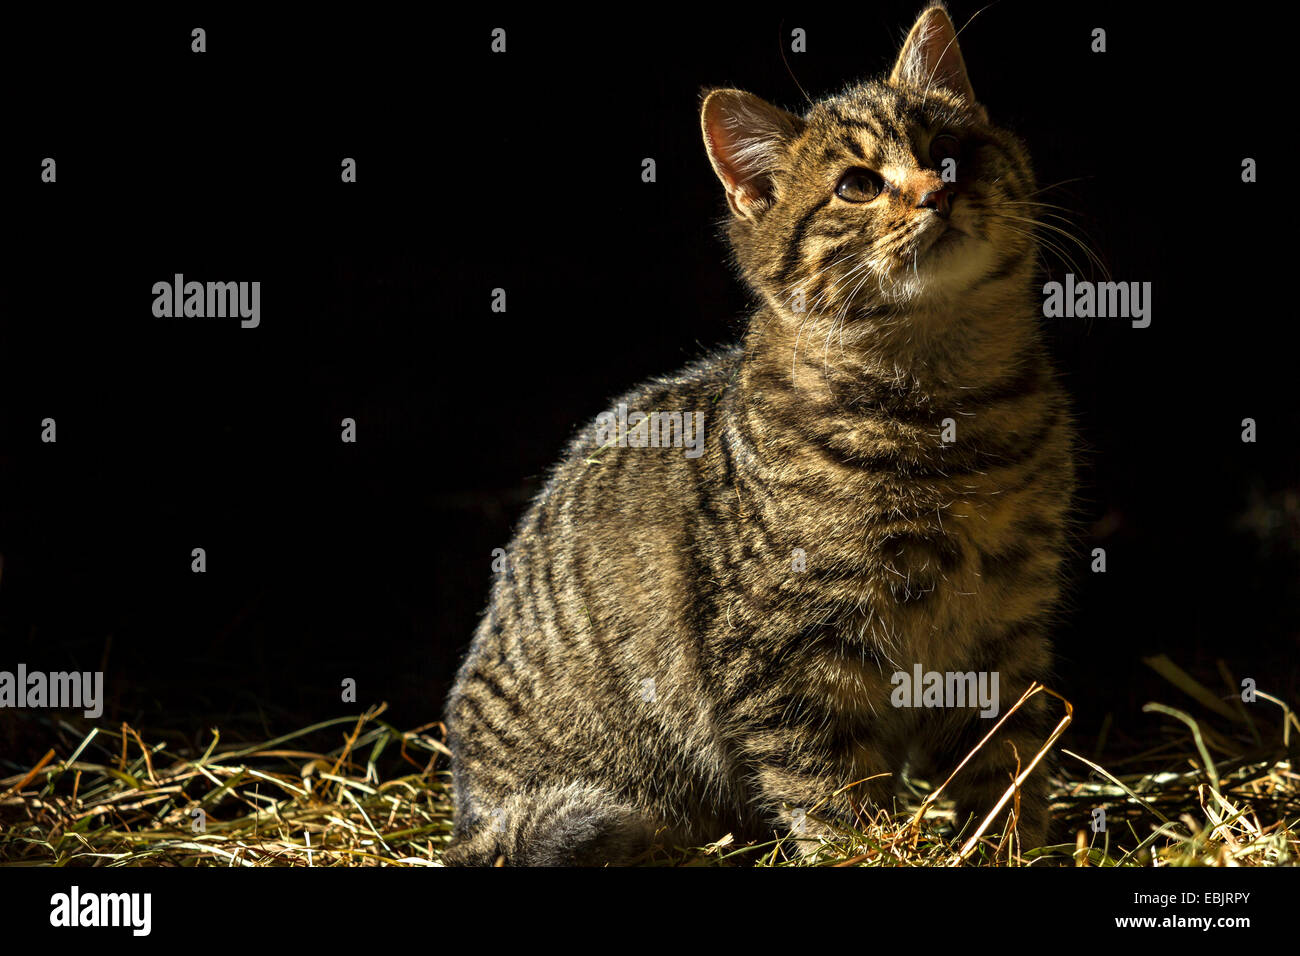 Retrato de un gato atigrado Foto de stock